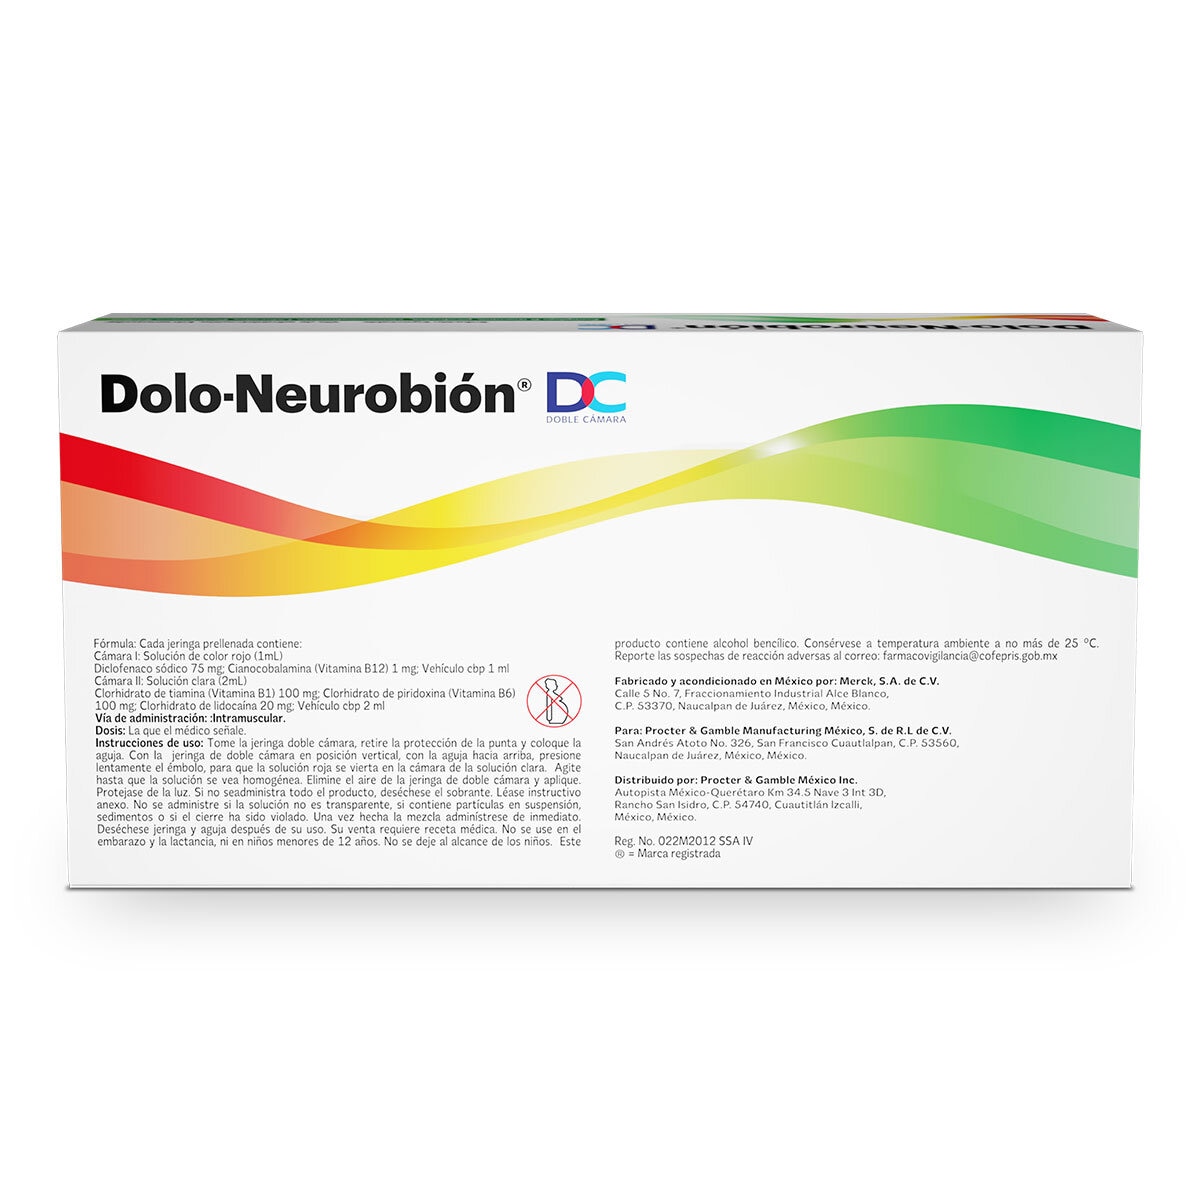 Dolo-Neurobión DC Solución Inyectable con 3 Jeringas Prellenadas de 3 ml